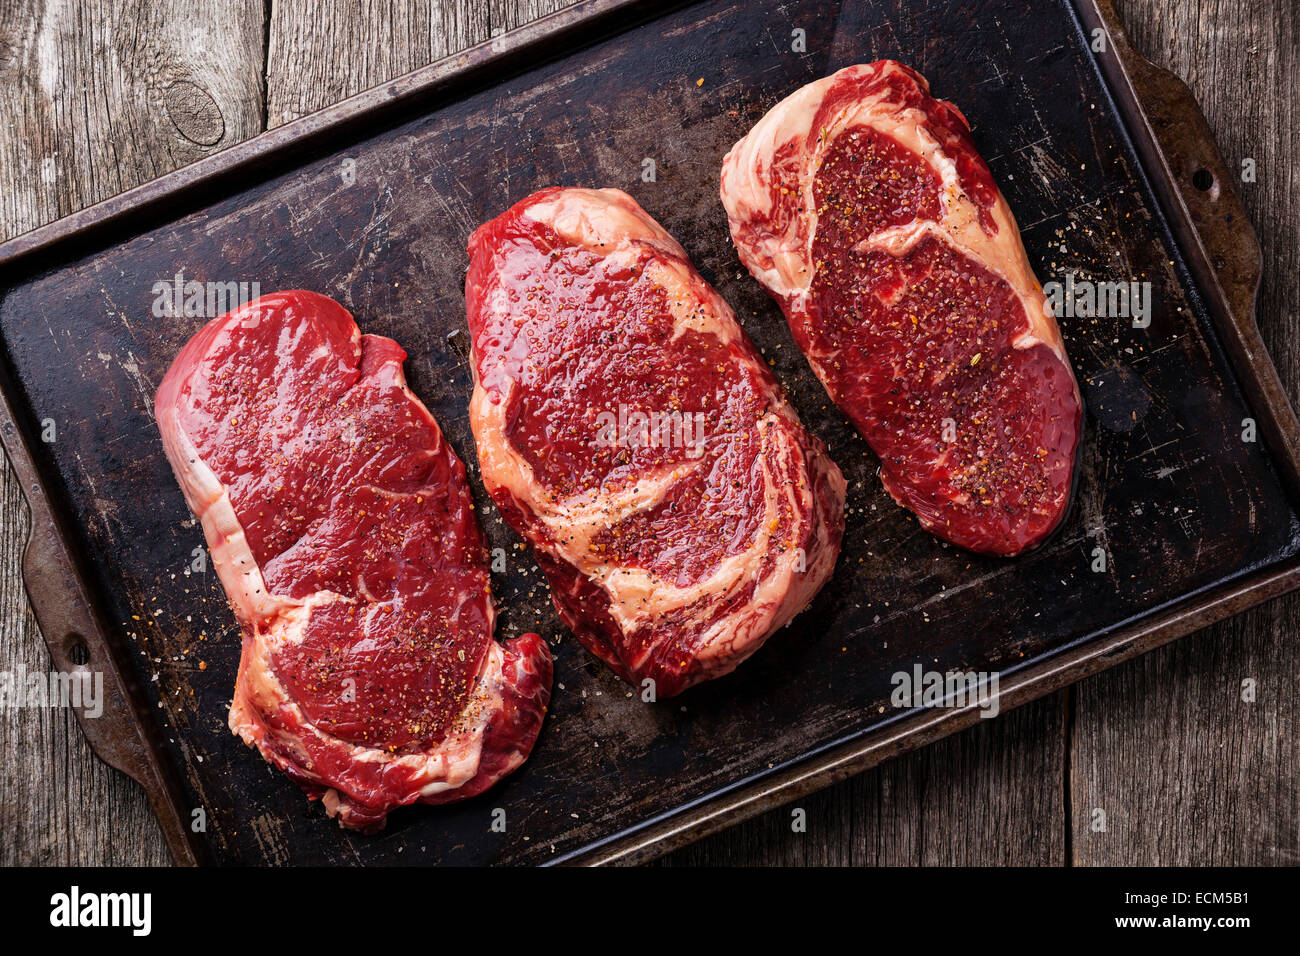 Three cuts of Raw fresh meat Steaks and seasonings on dark background Stock Photo